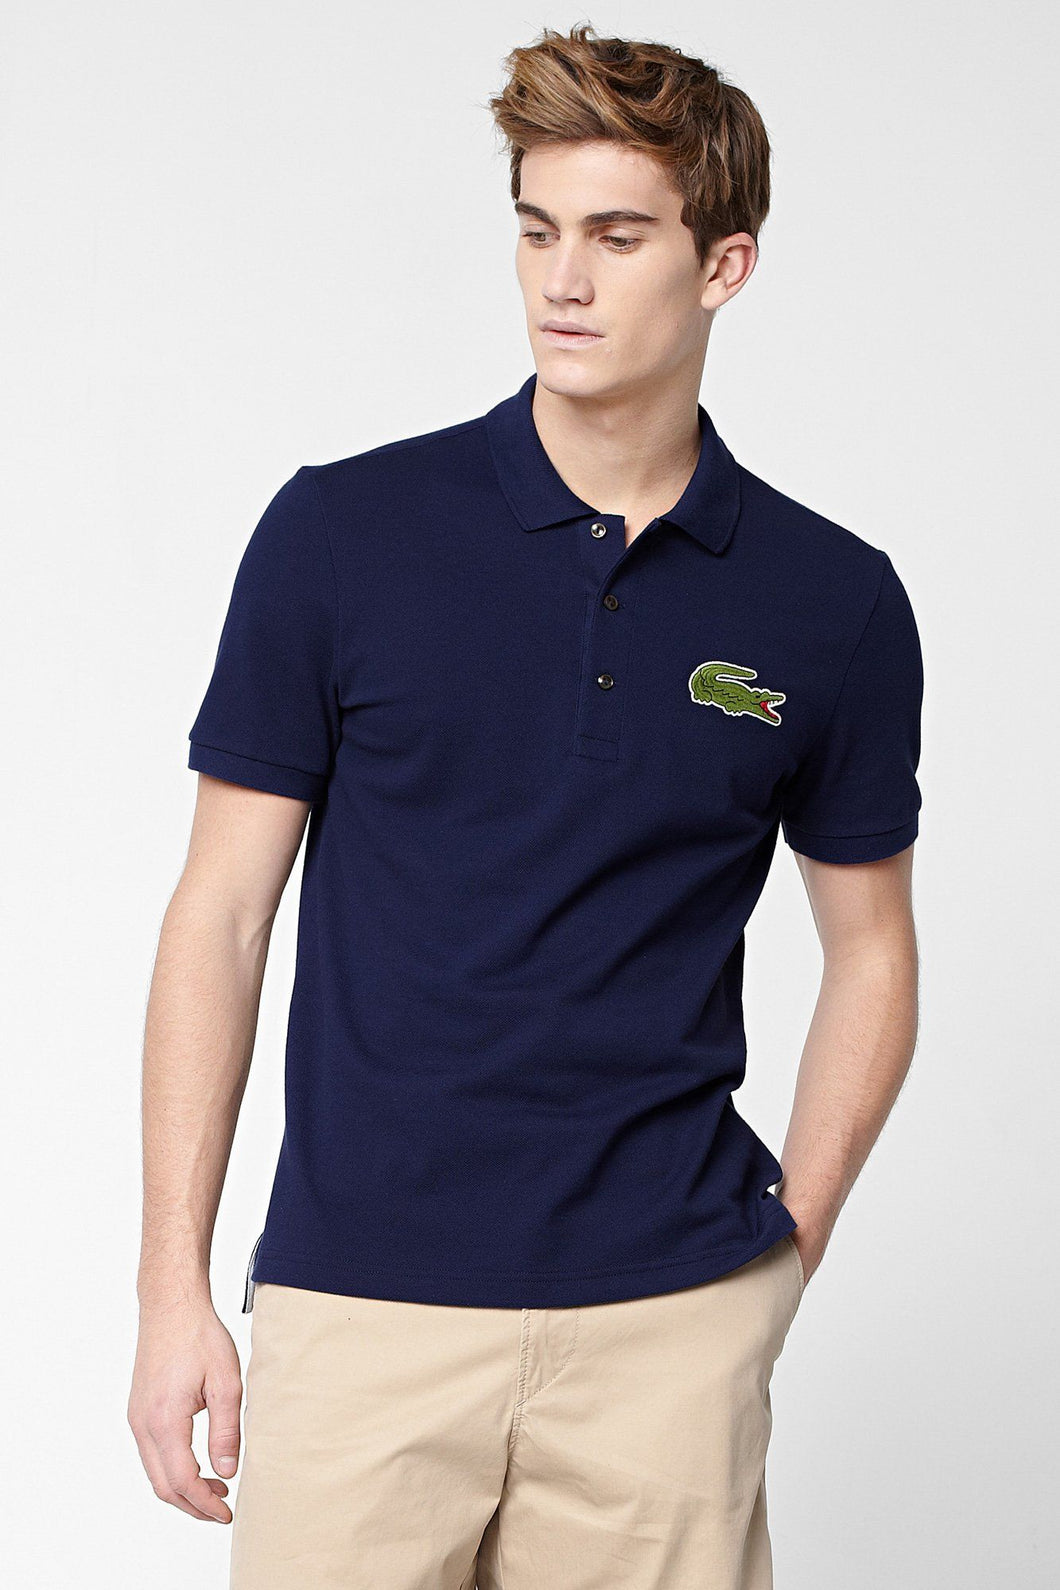 Men's Short Sleeve Lacoste Polo Shirt - Navy